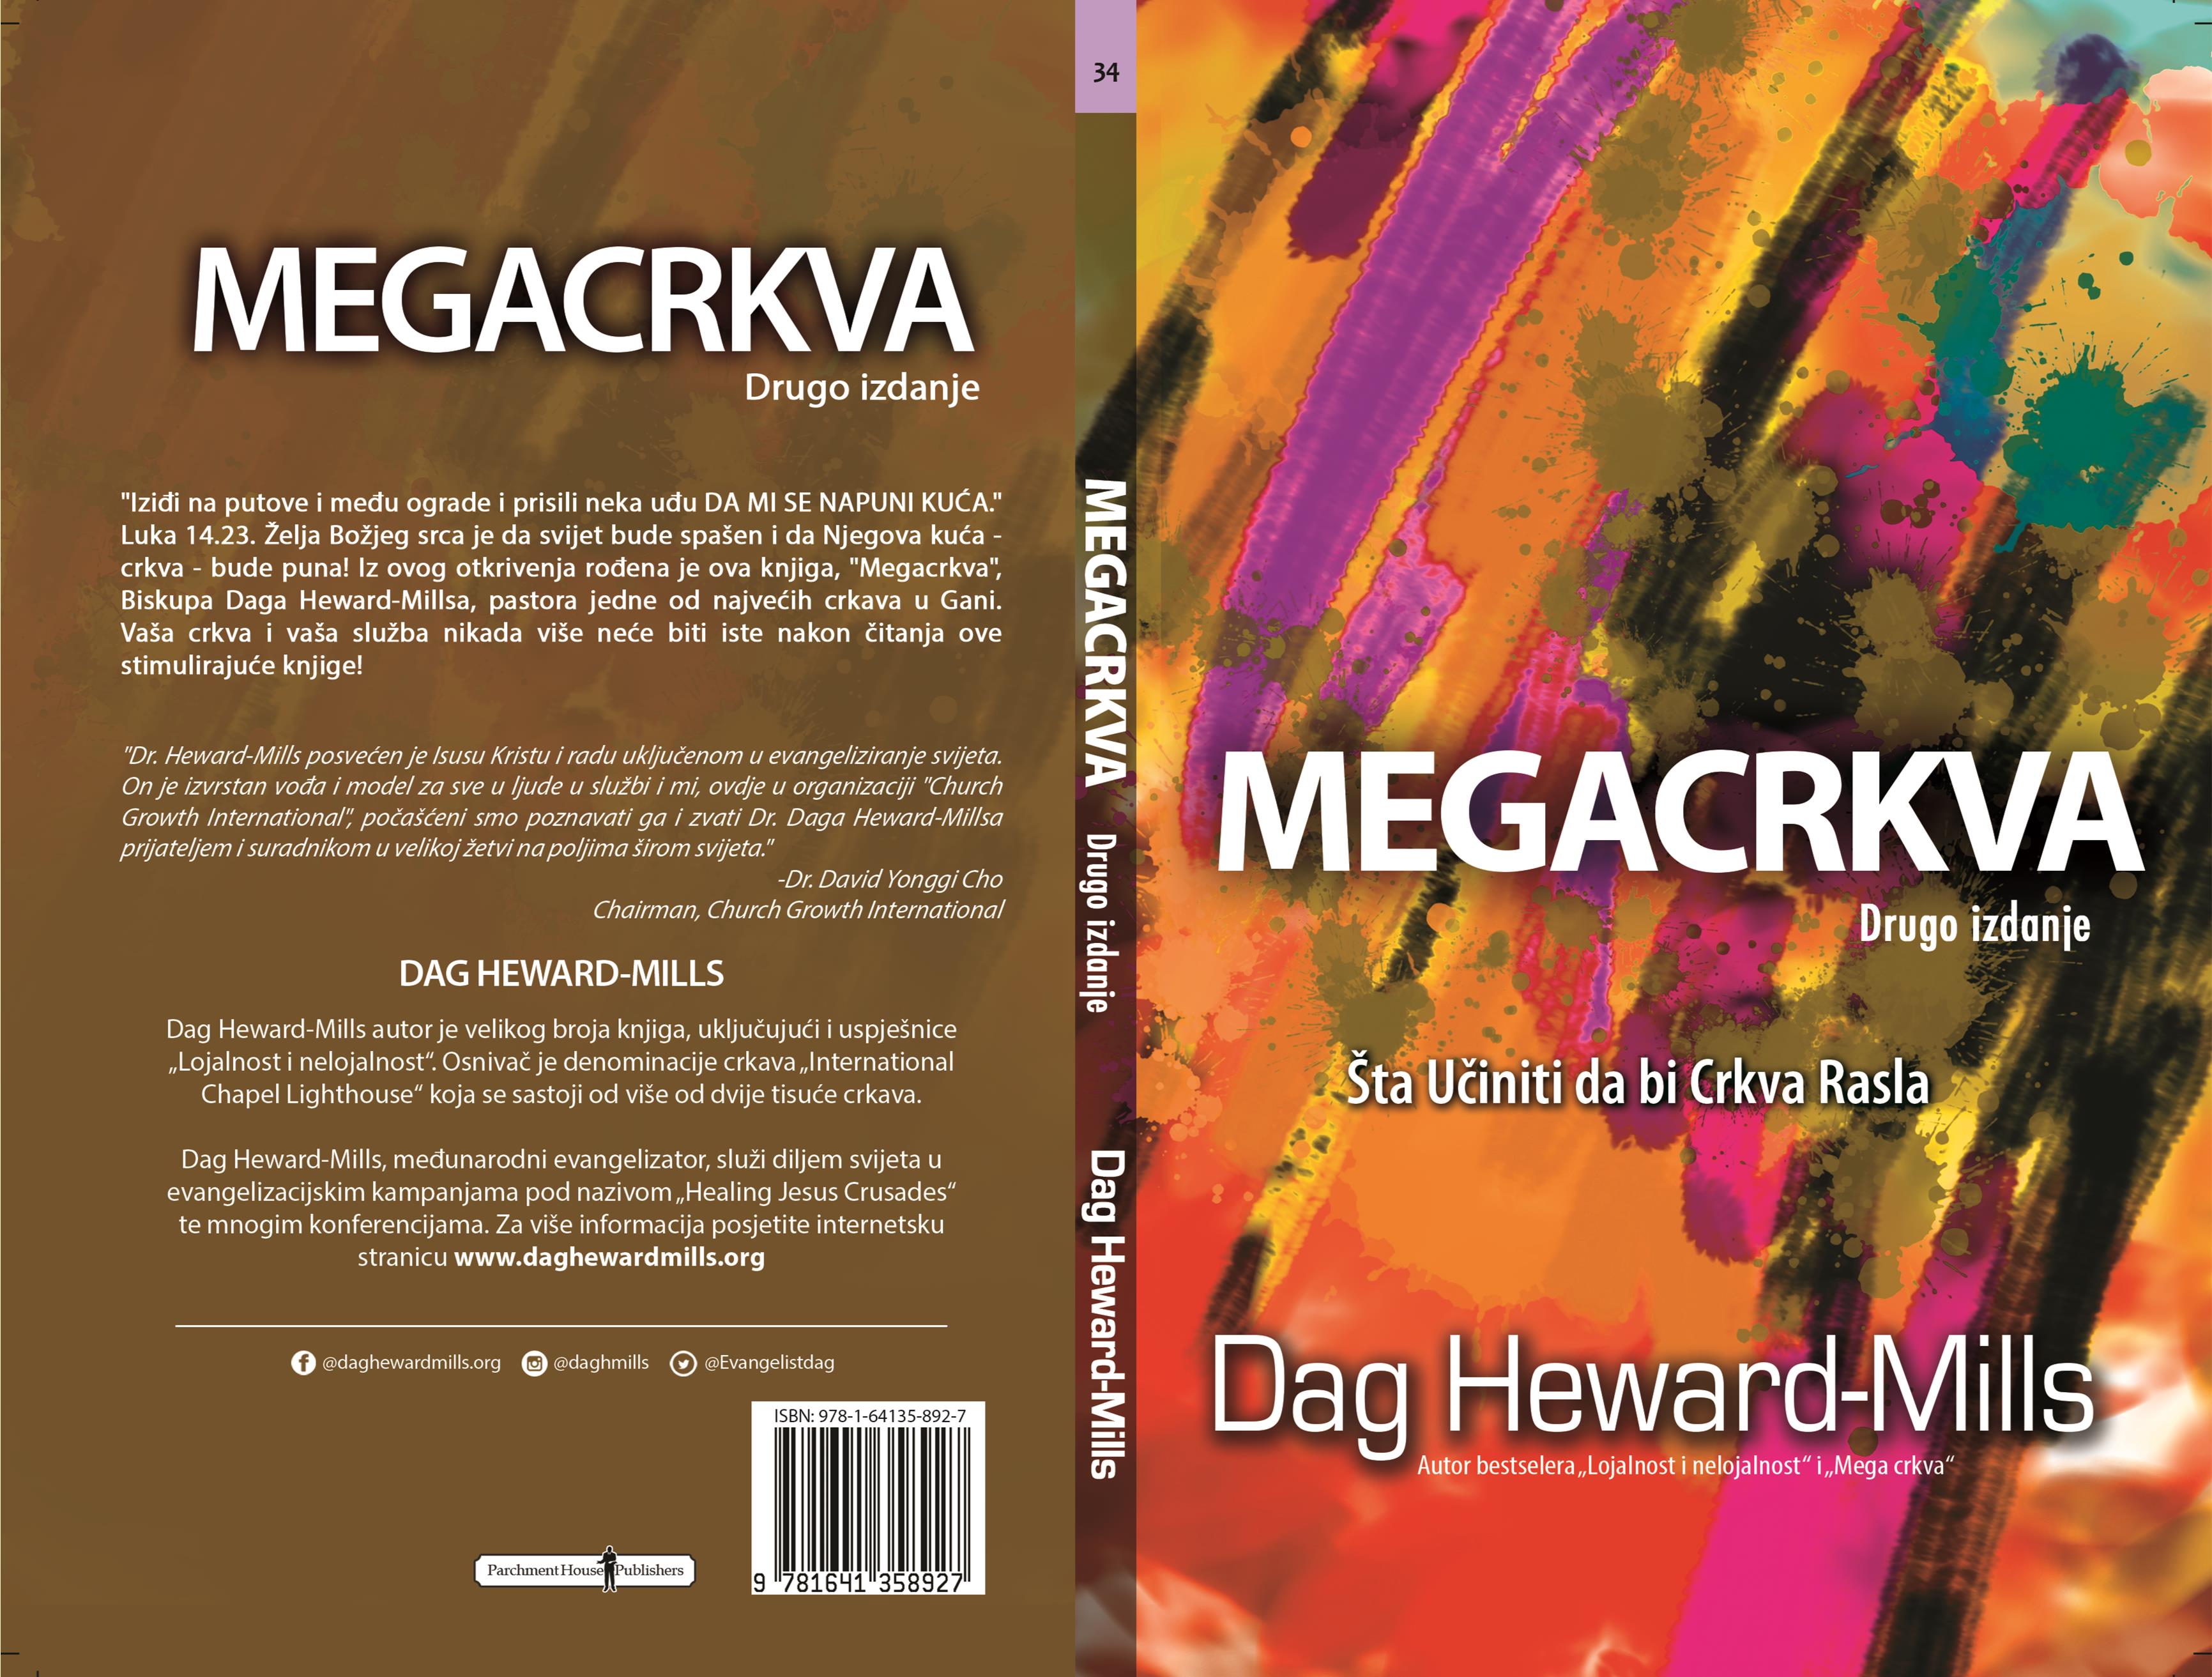 Megacrkva cover image